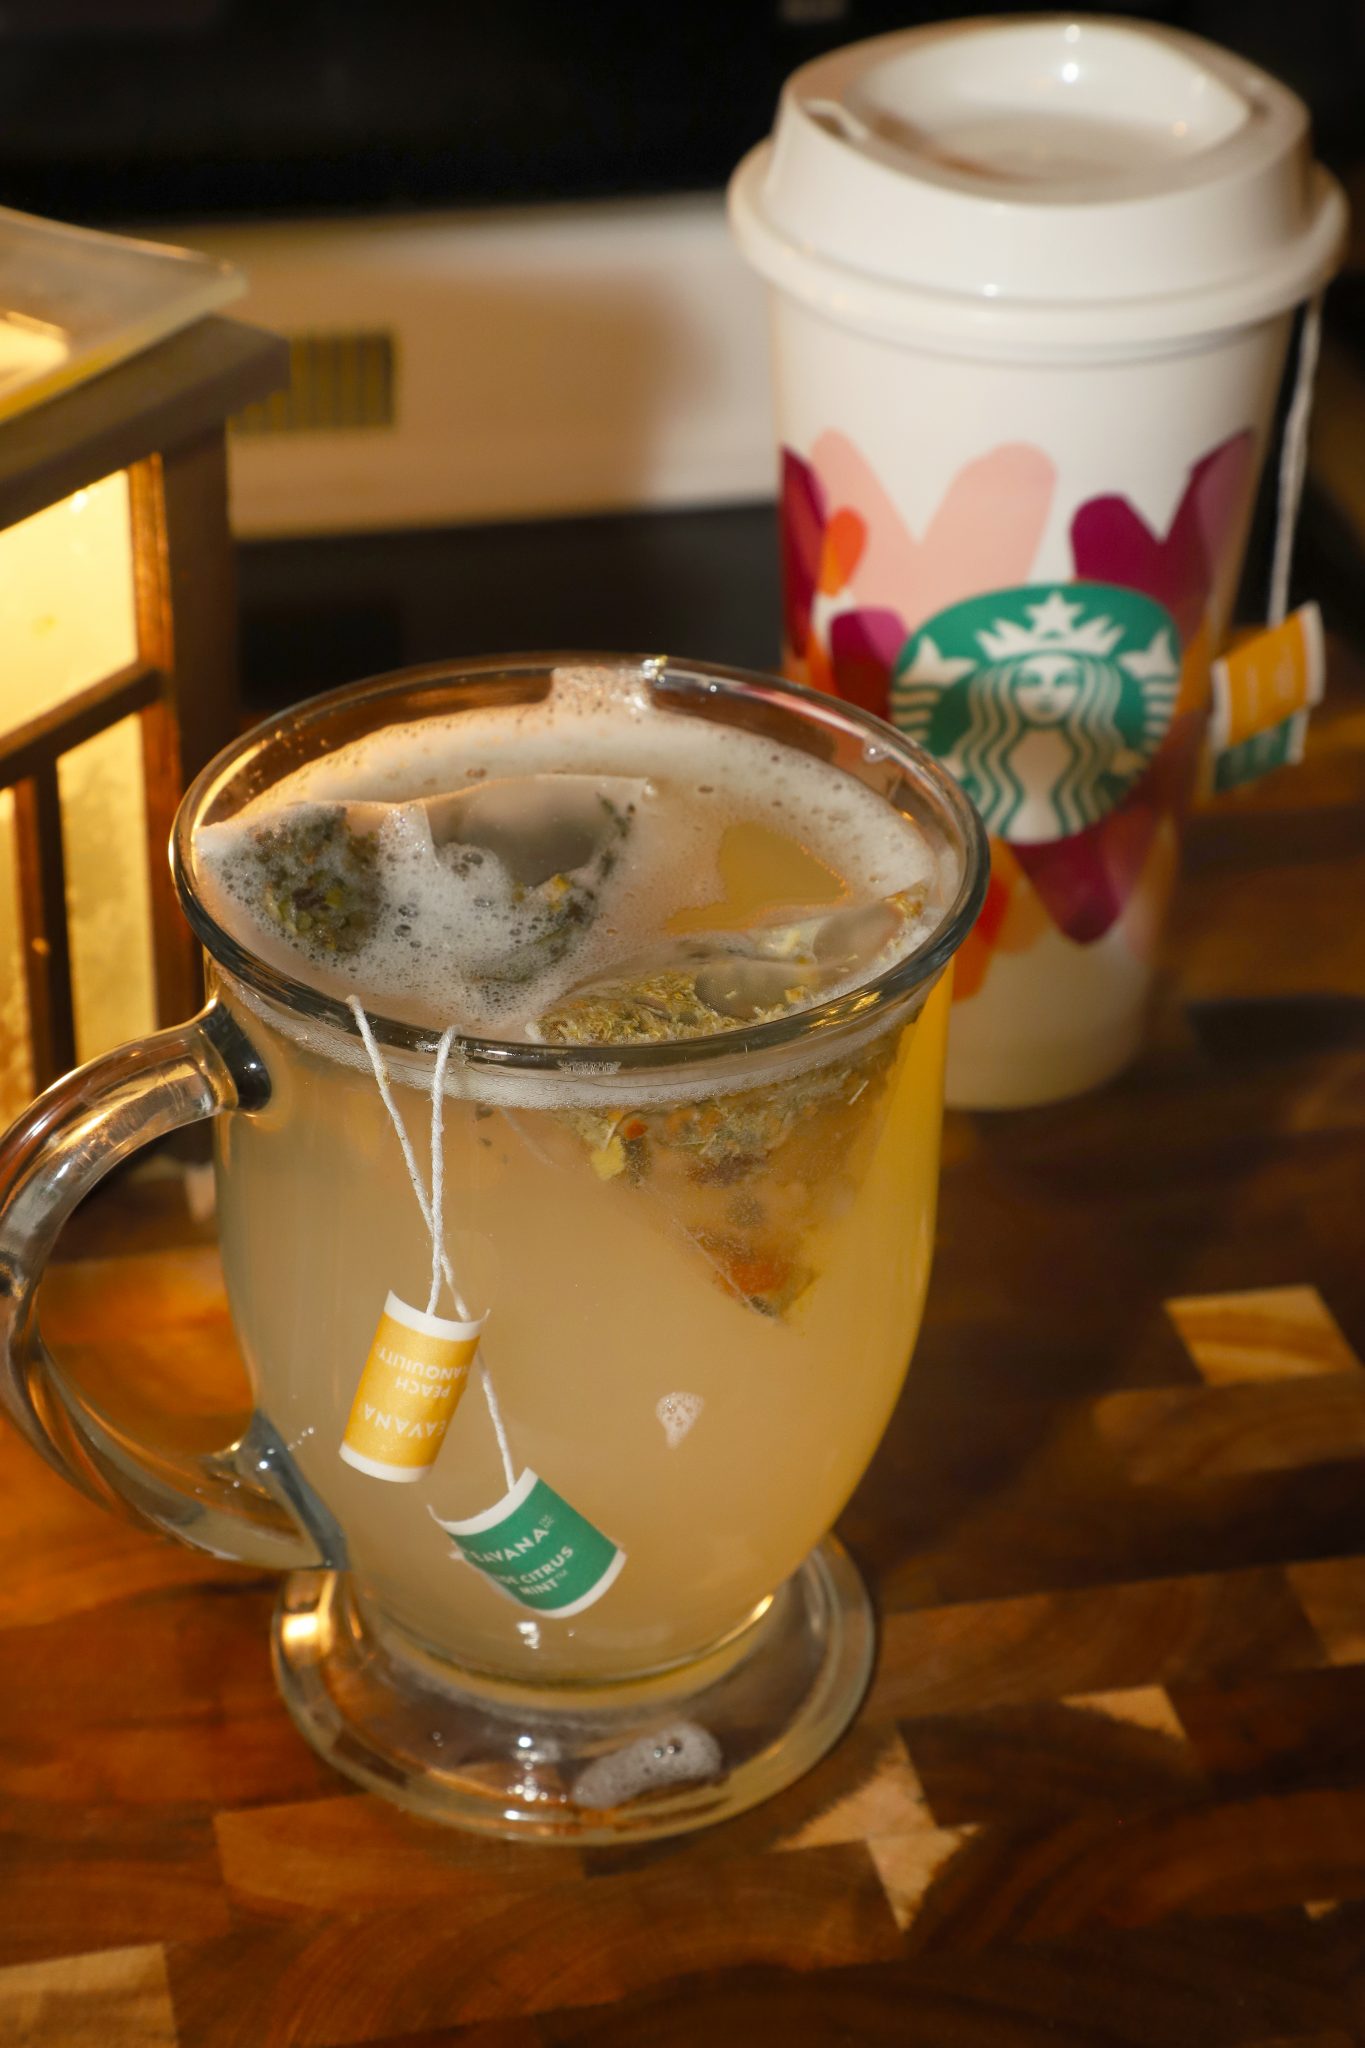 Starbucks Medicine Ball Tea - For the Love of Food